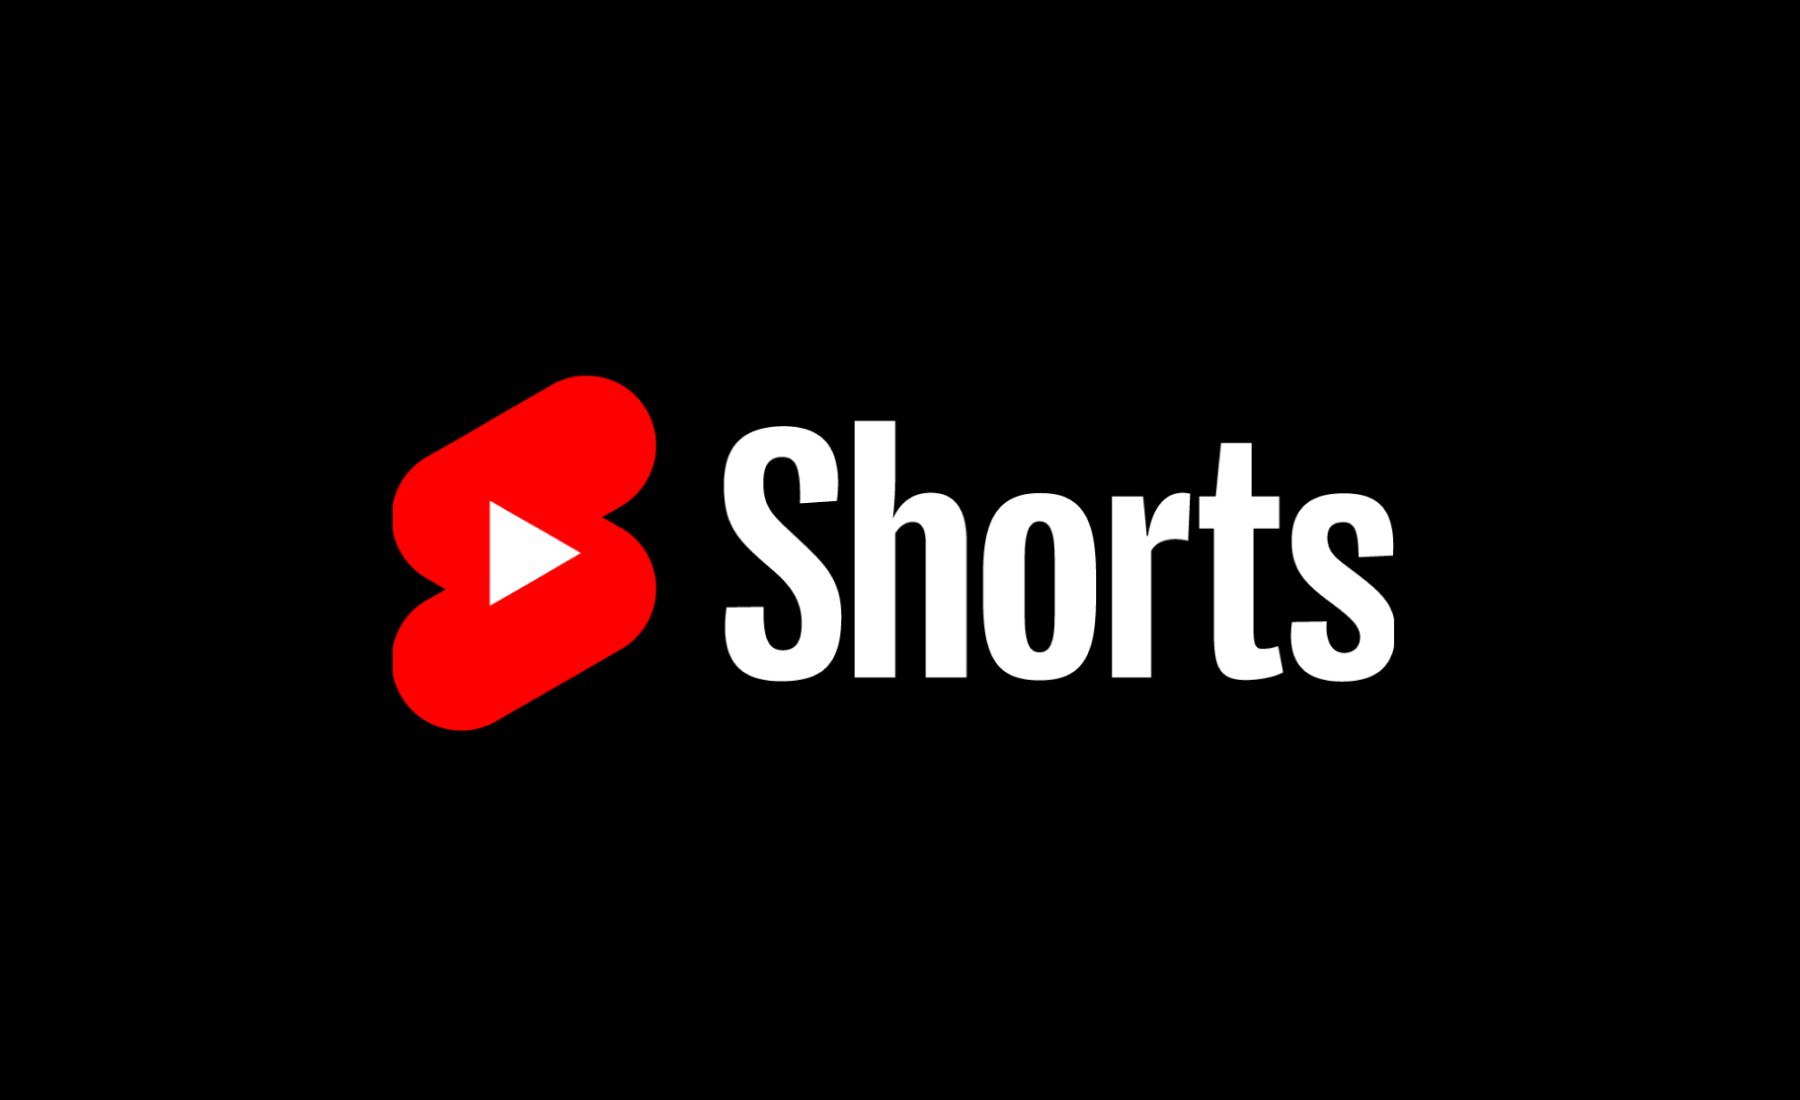 Youtube shorts ссылка